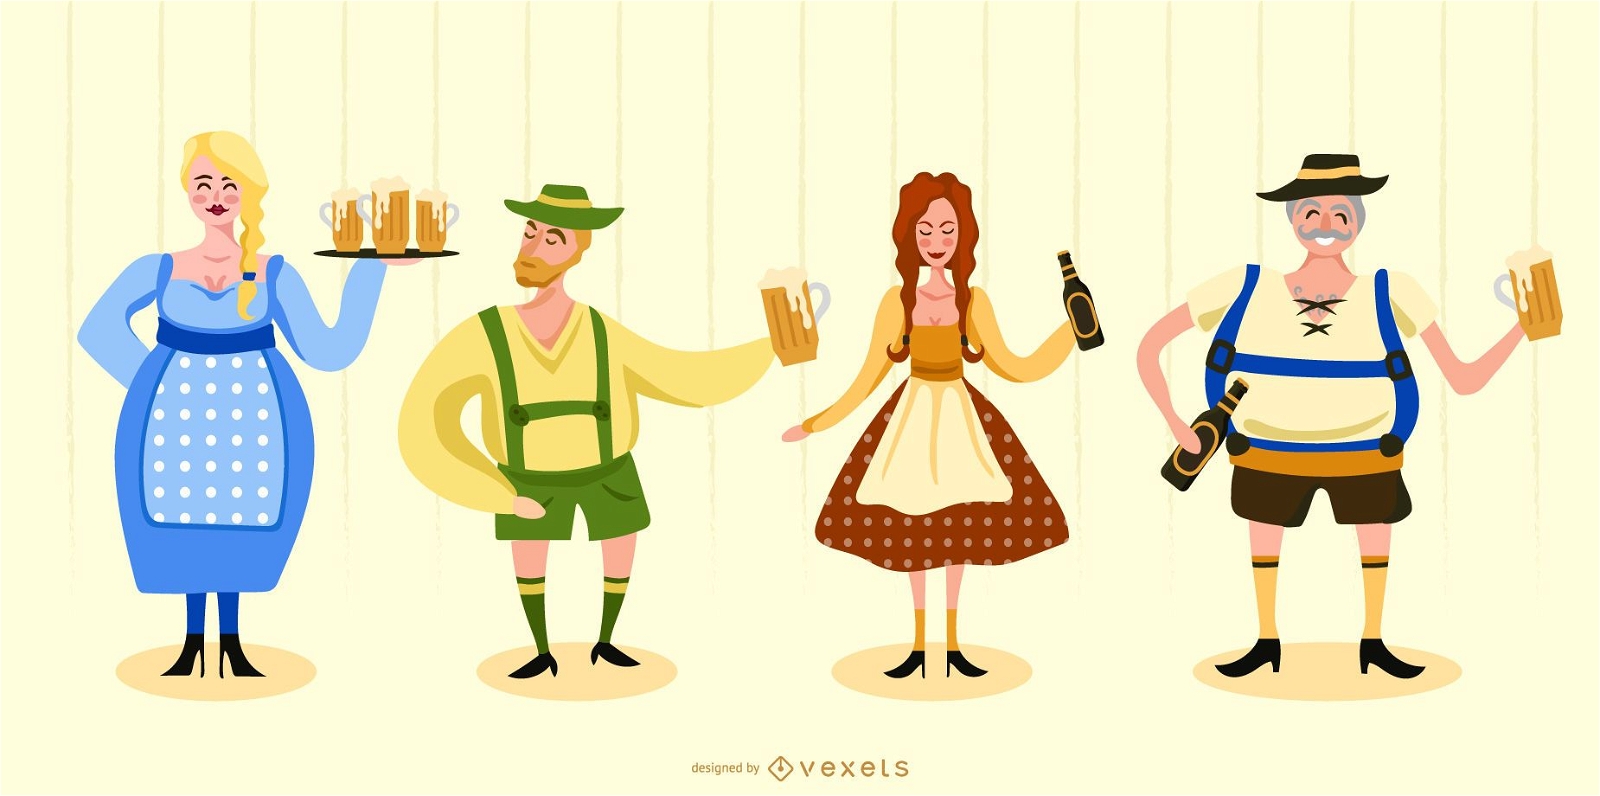 Oktoberfest traditional characters set 